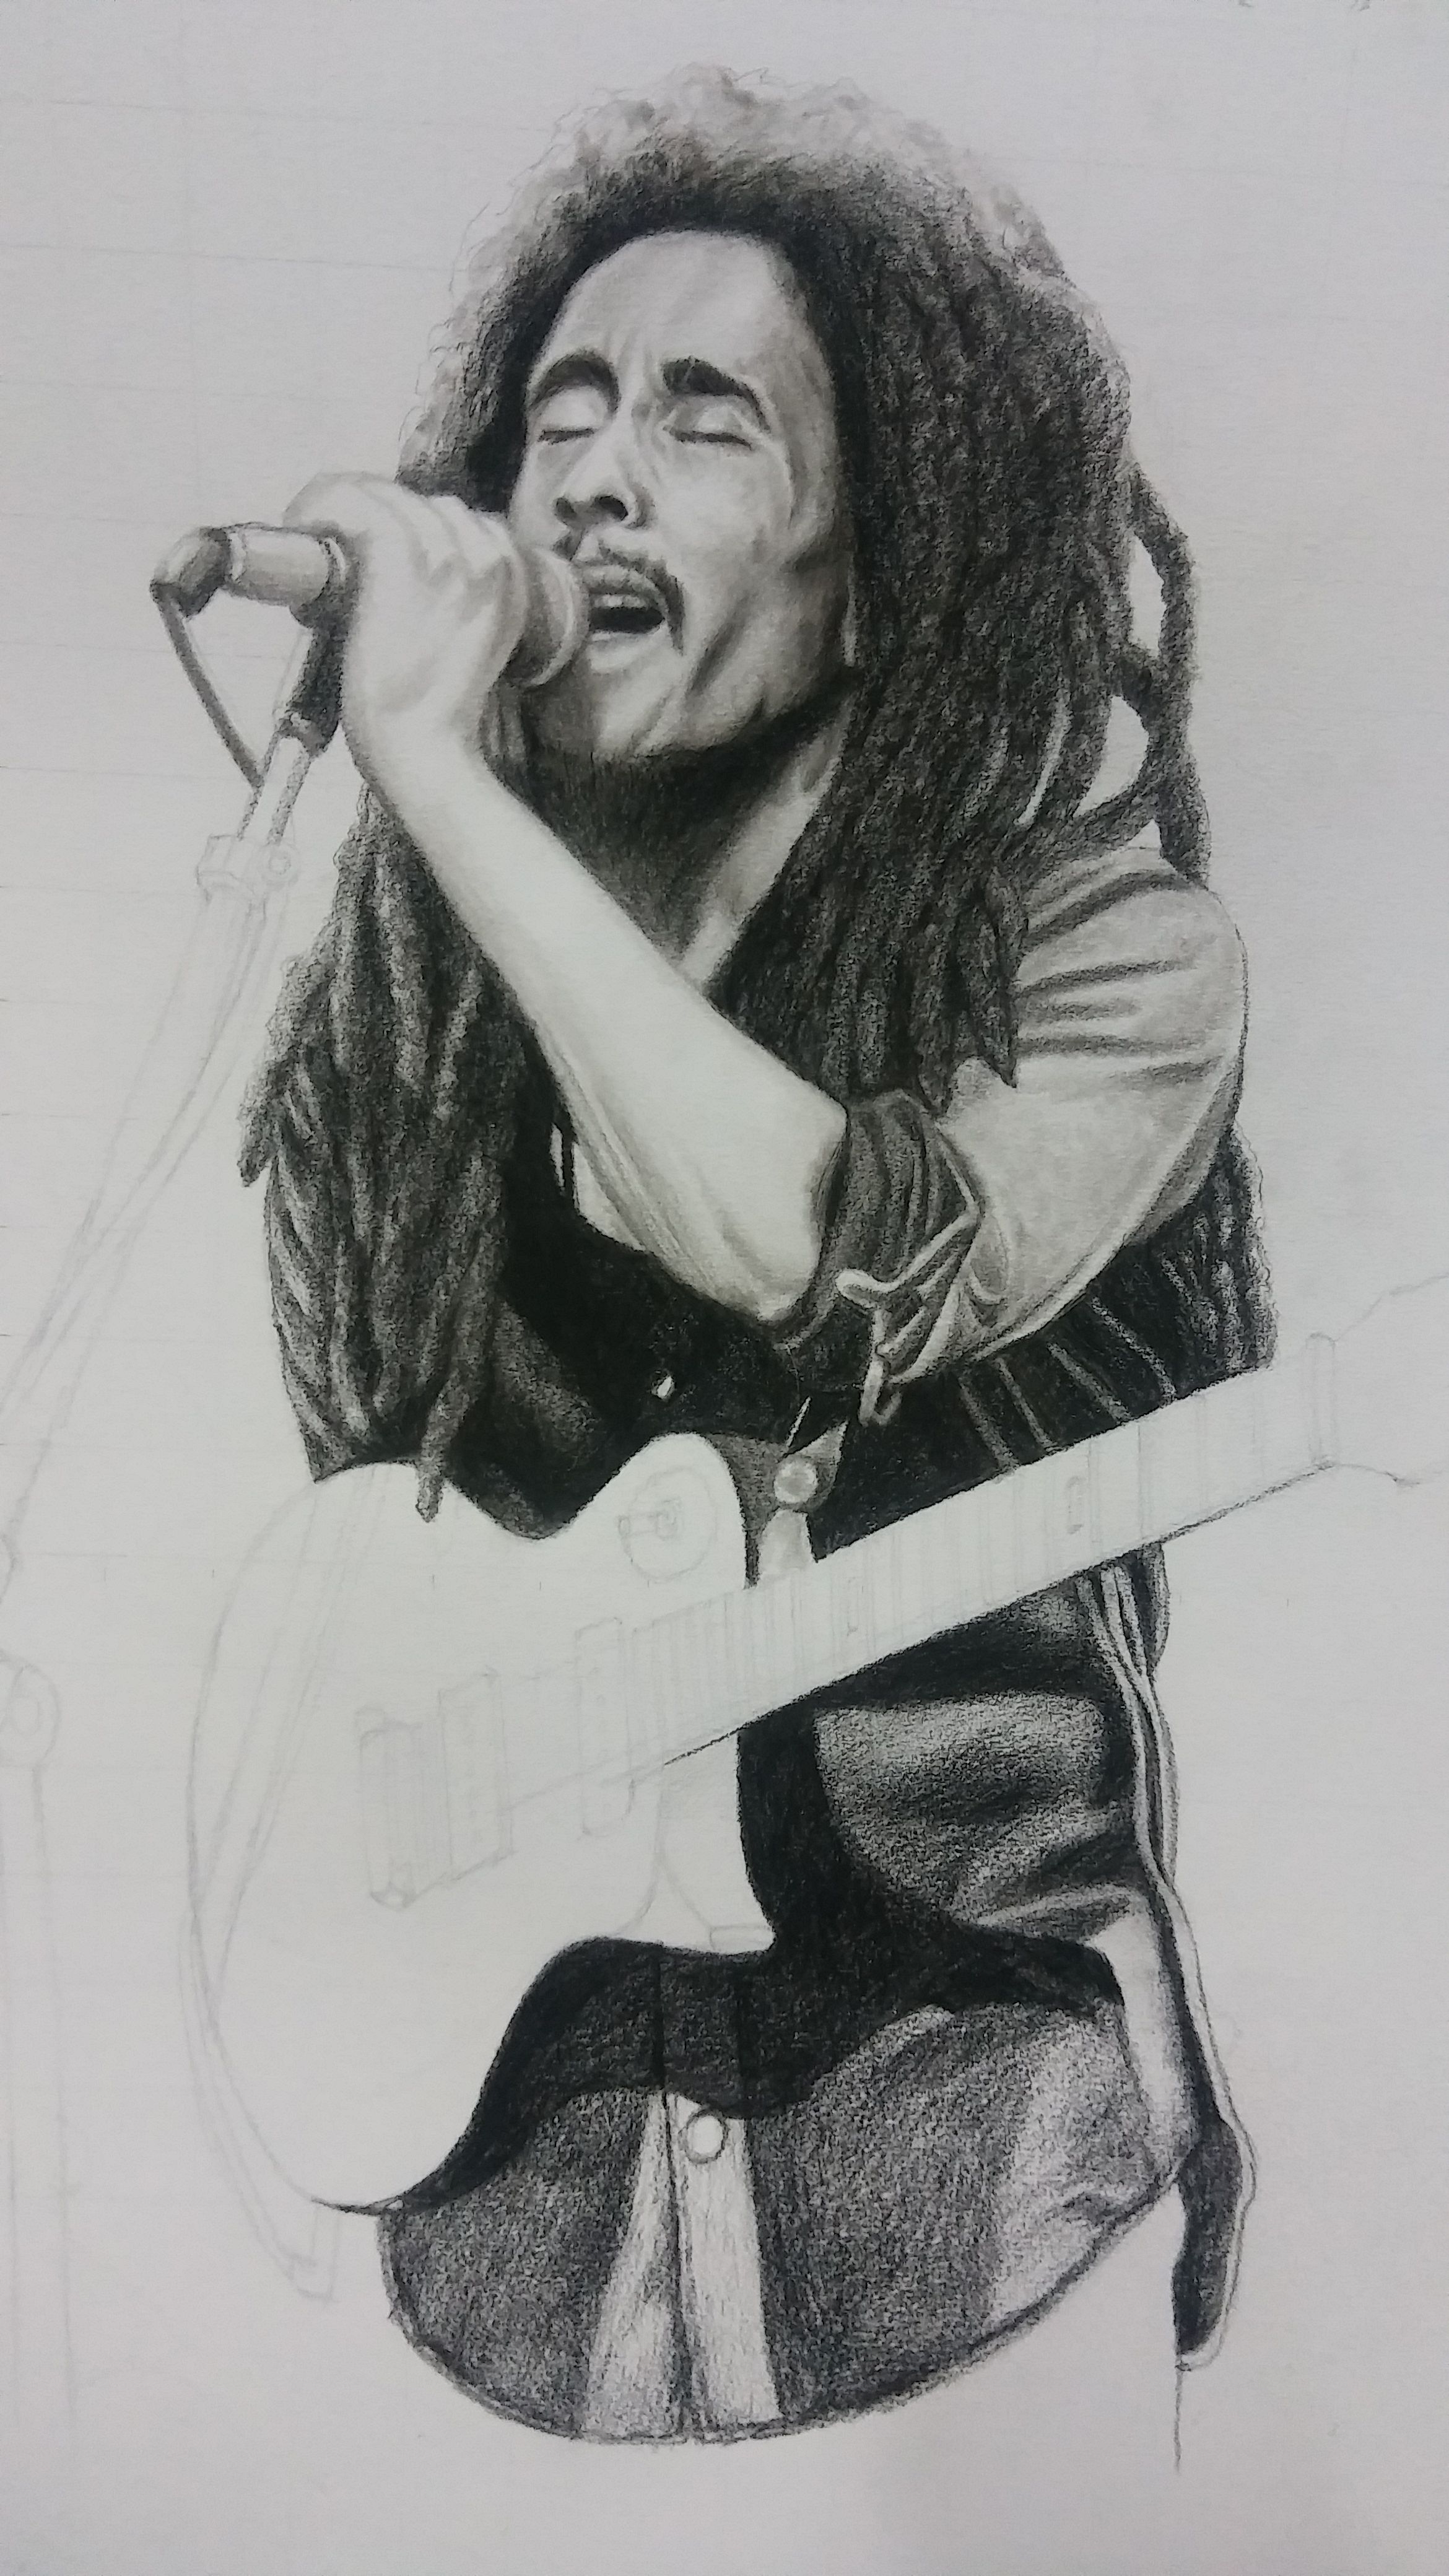 Bob Marley Sketch at Explore